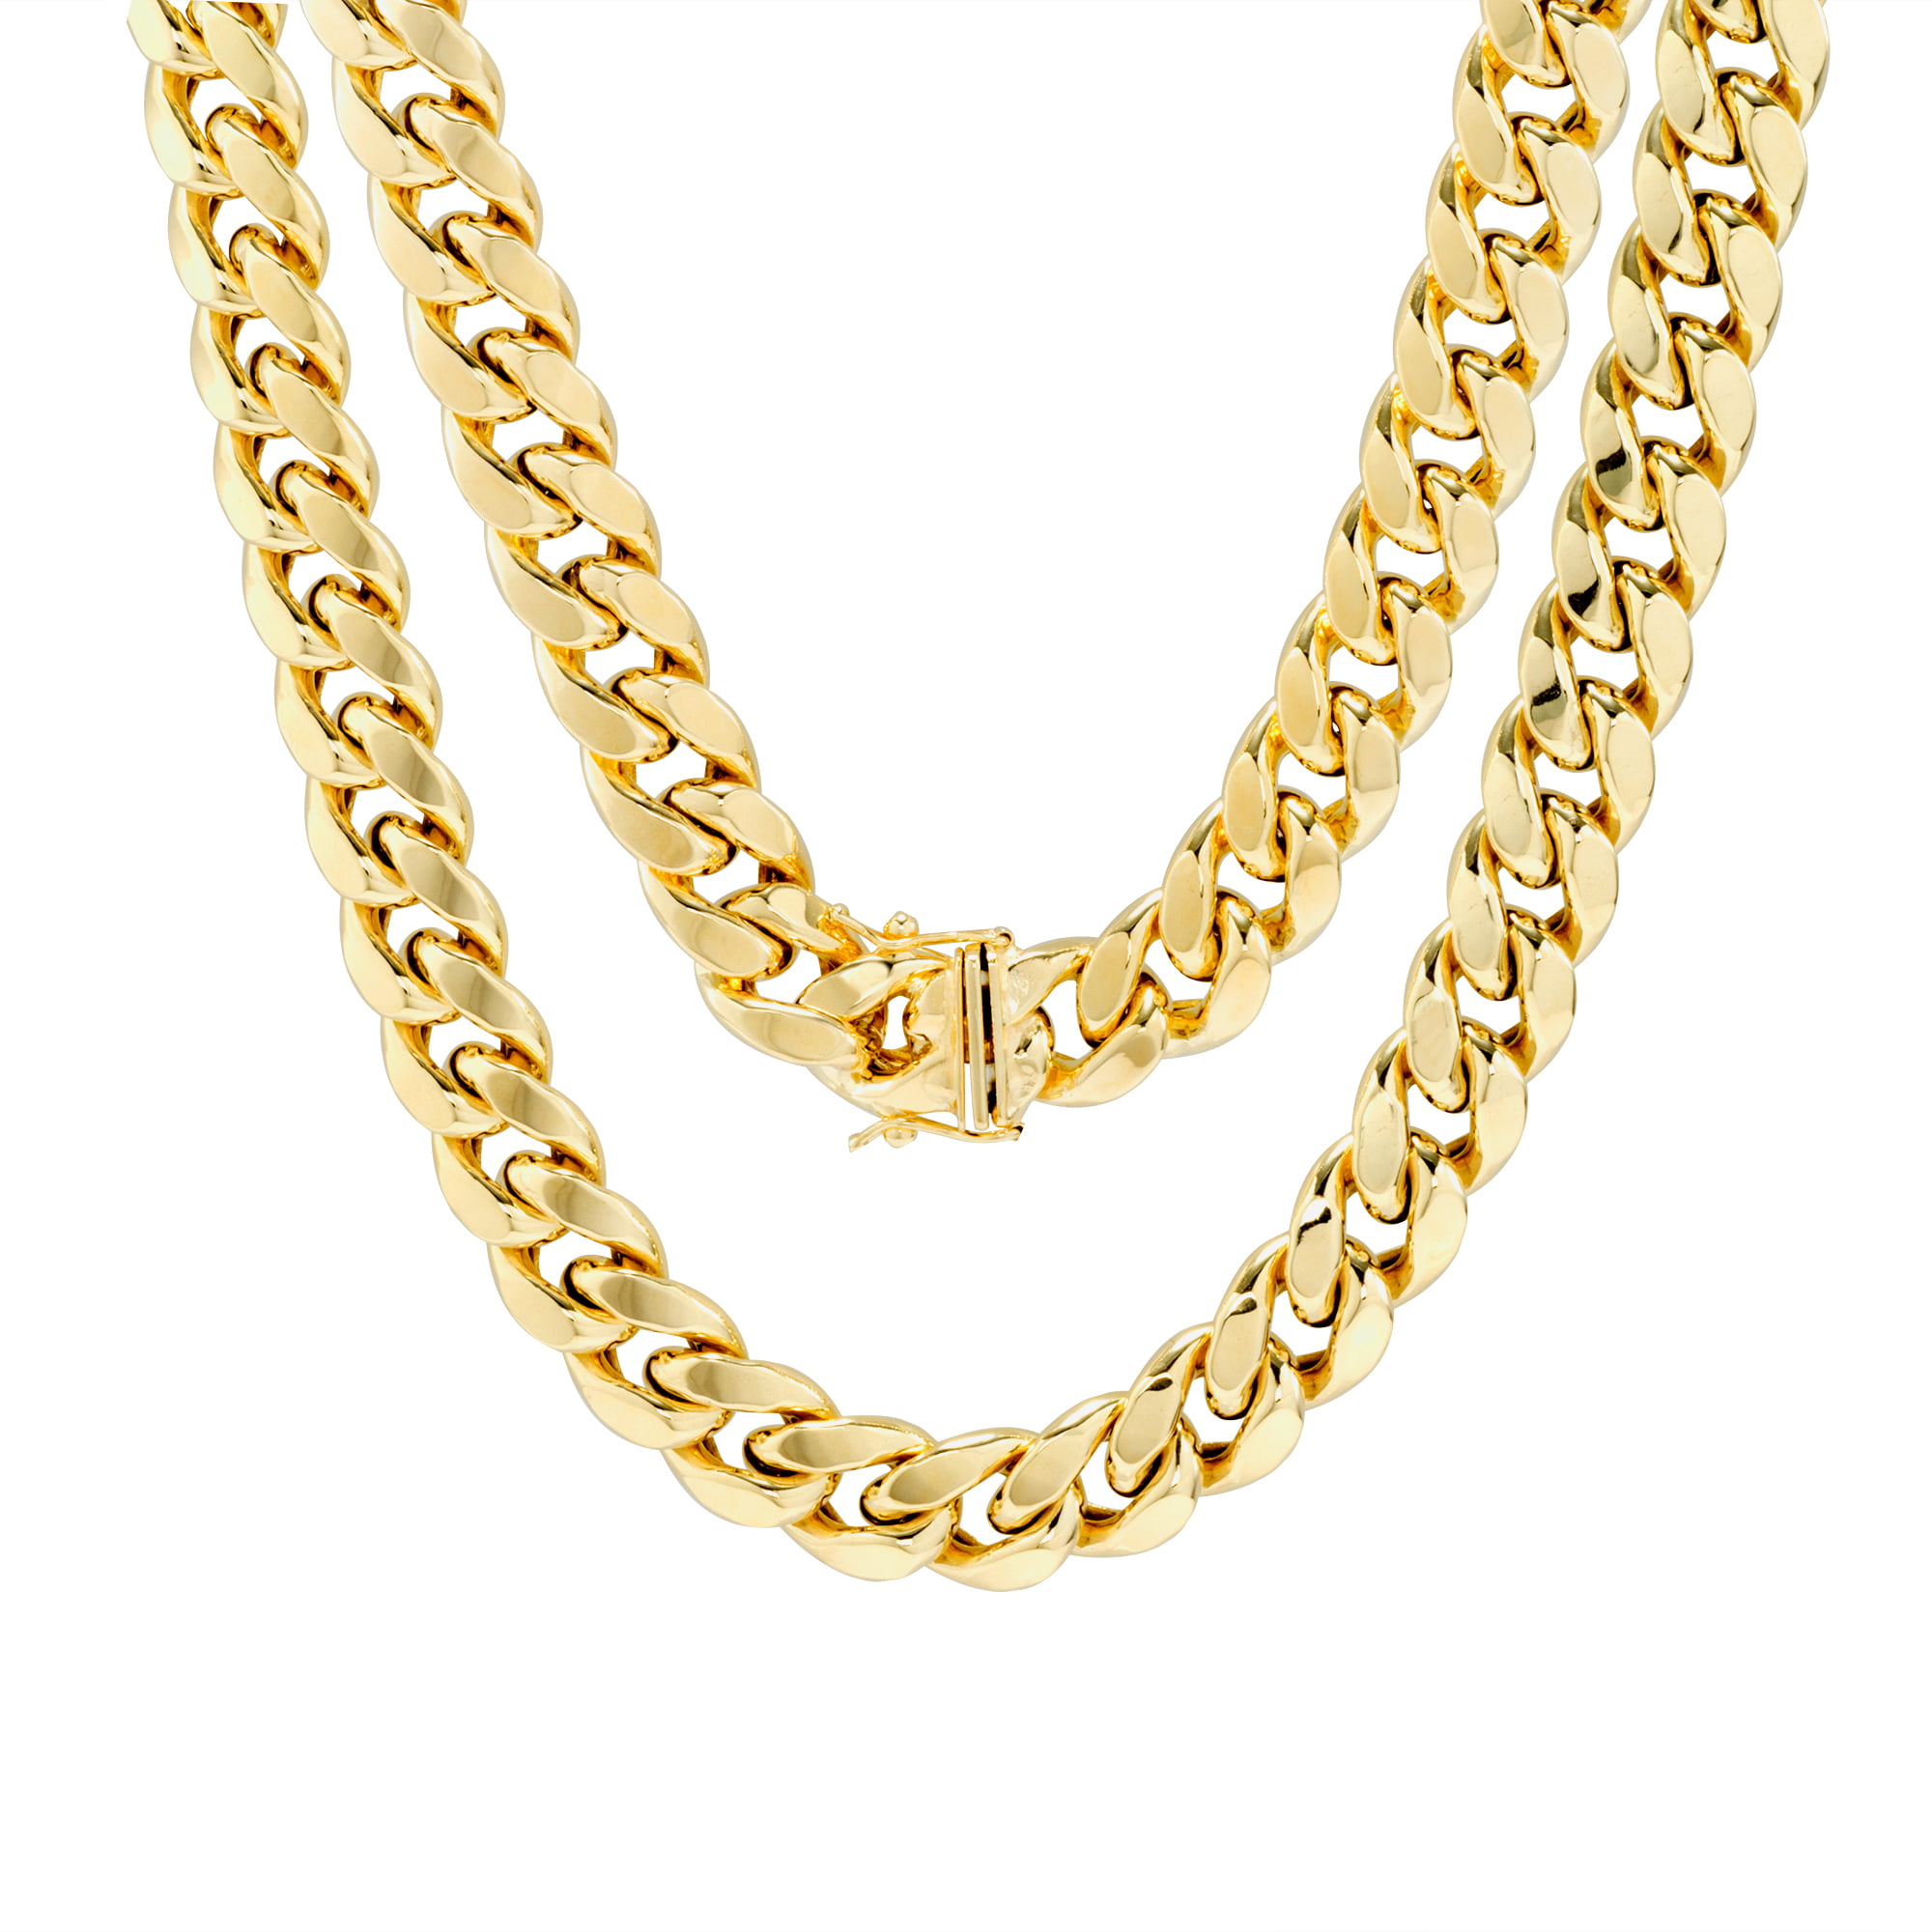 Nuragold - 14K Yellow Gold Mens 11mm Hollow Miami Cuban Link Chain Pendant Necklace, 24&quot;- 30&quot;